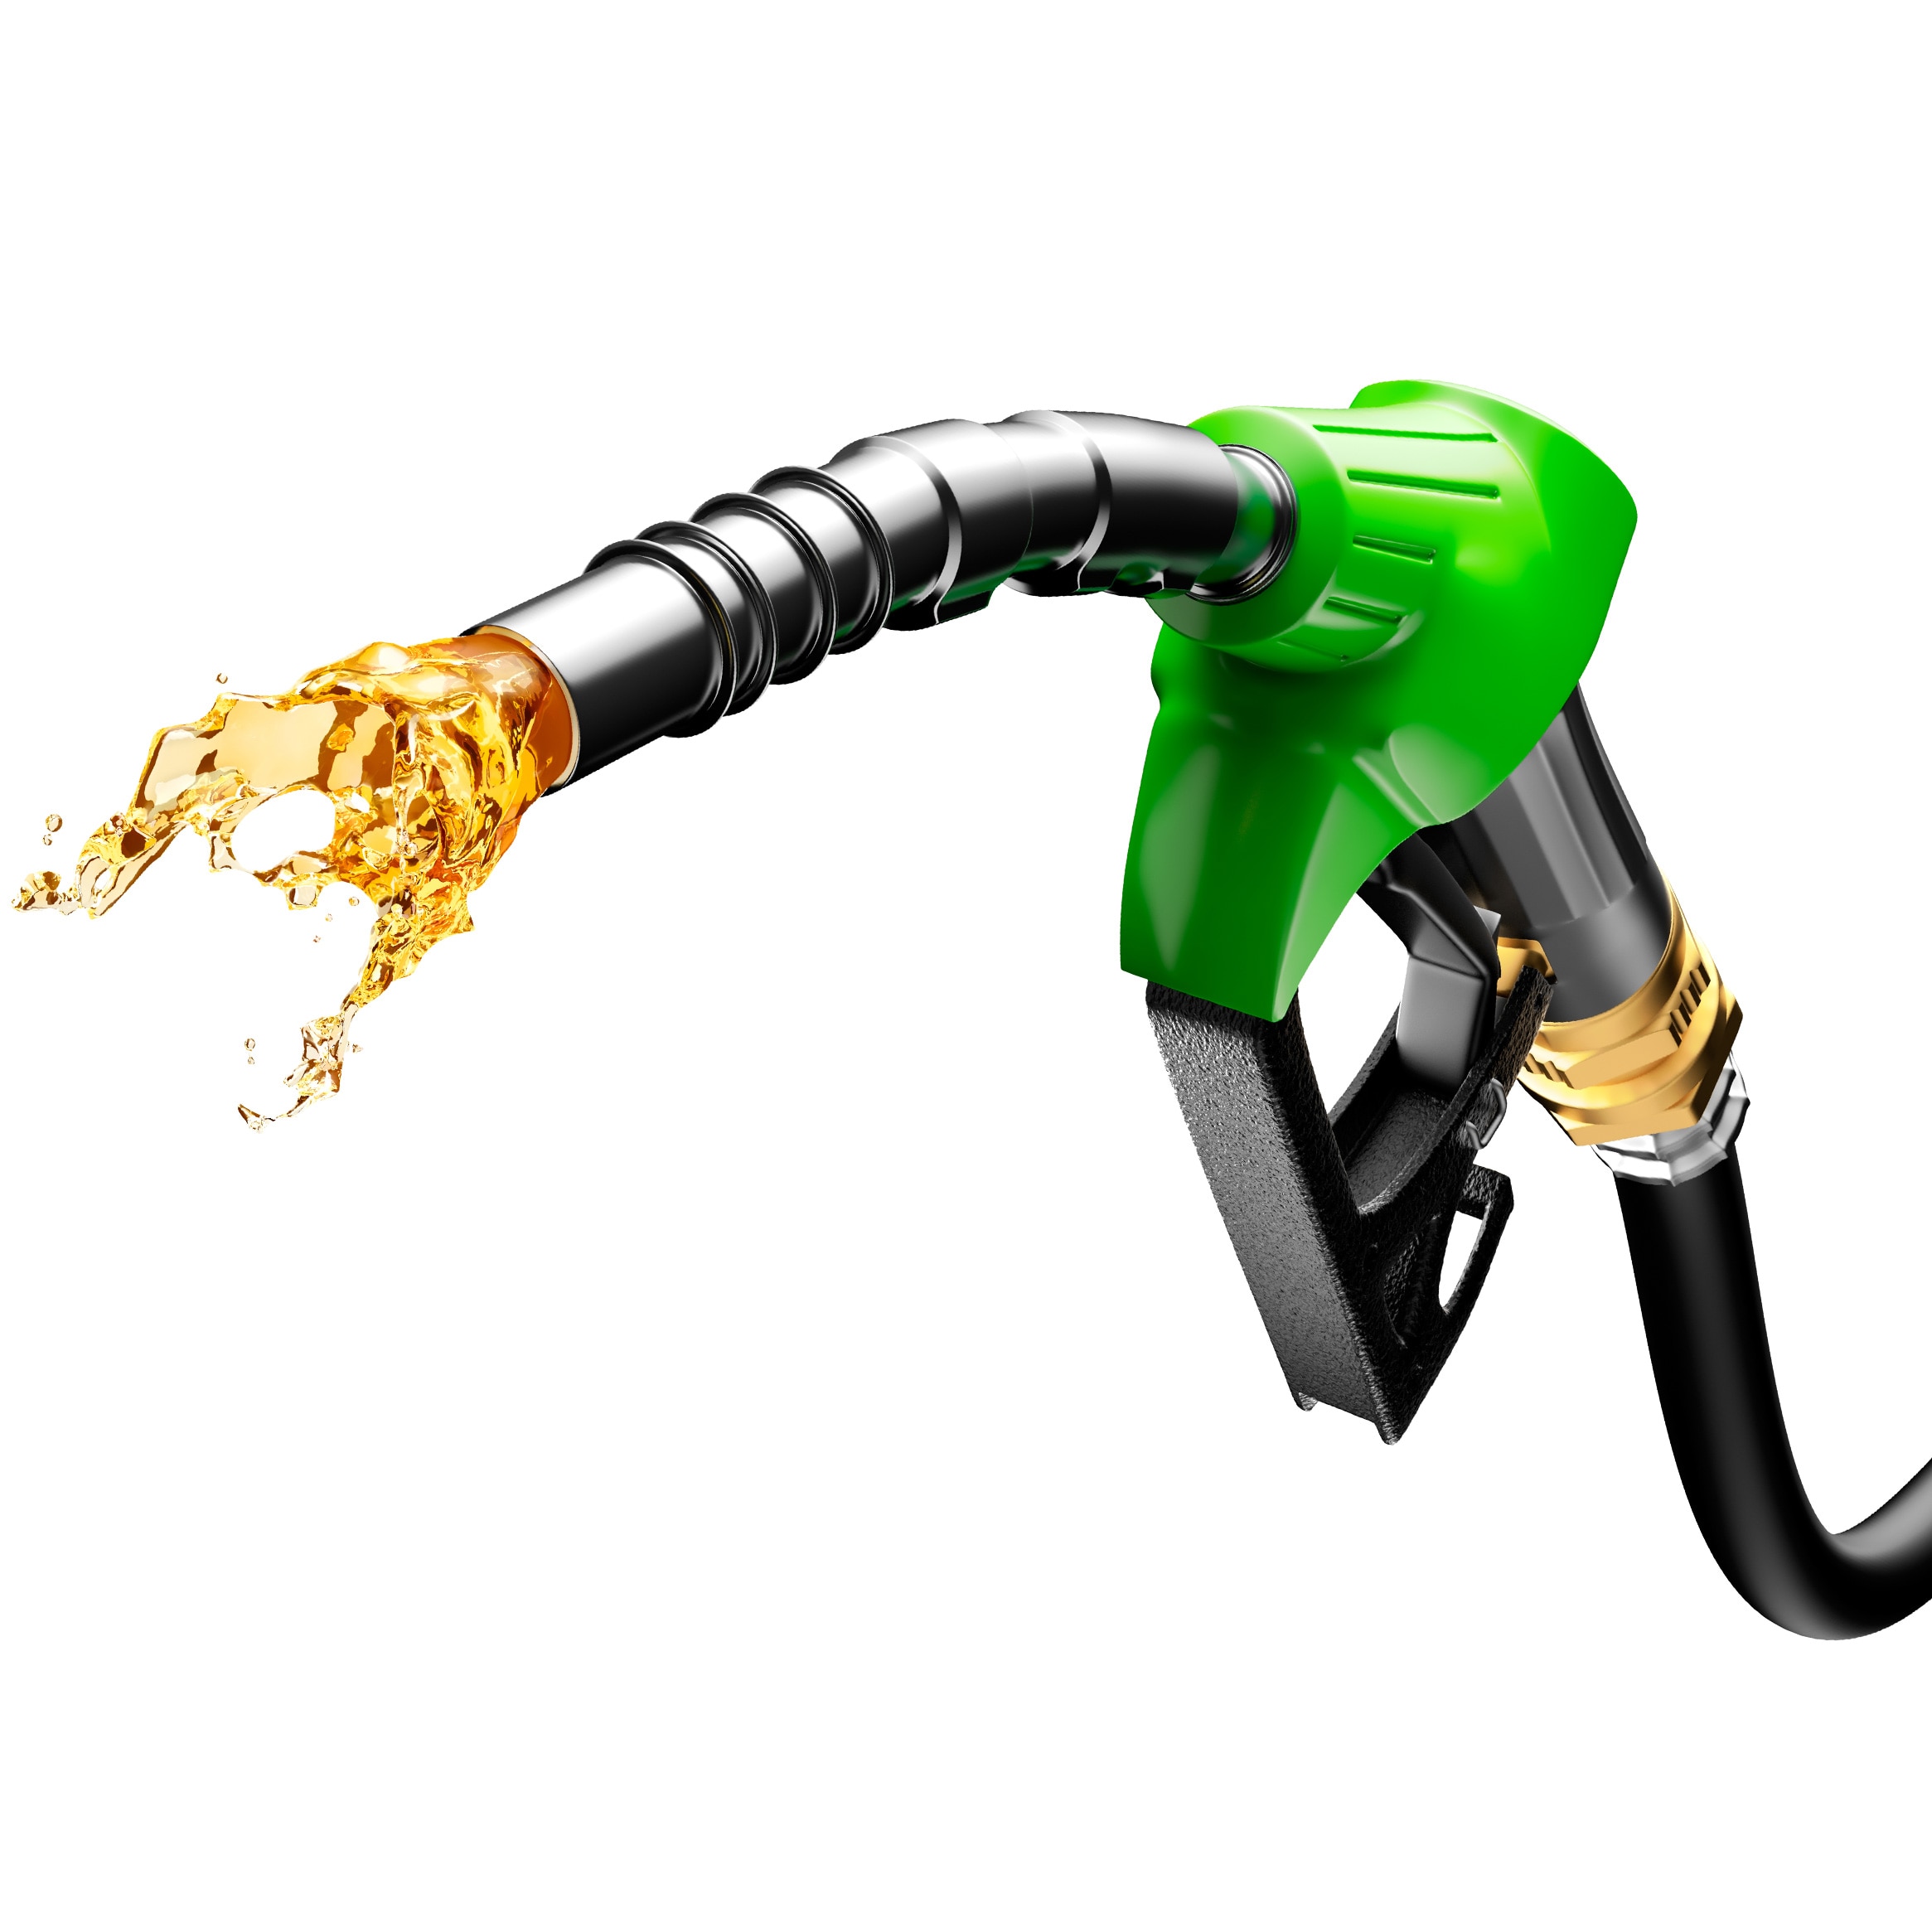 Precio diario de gasolina en México